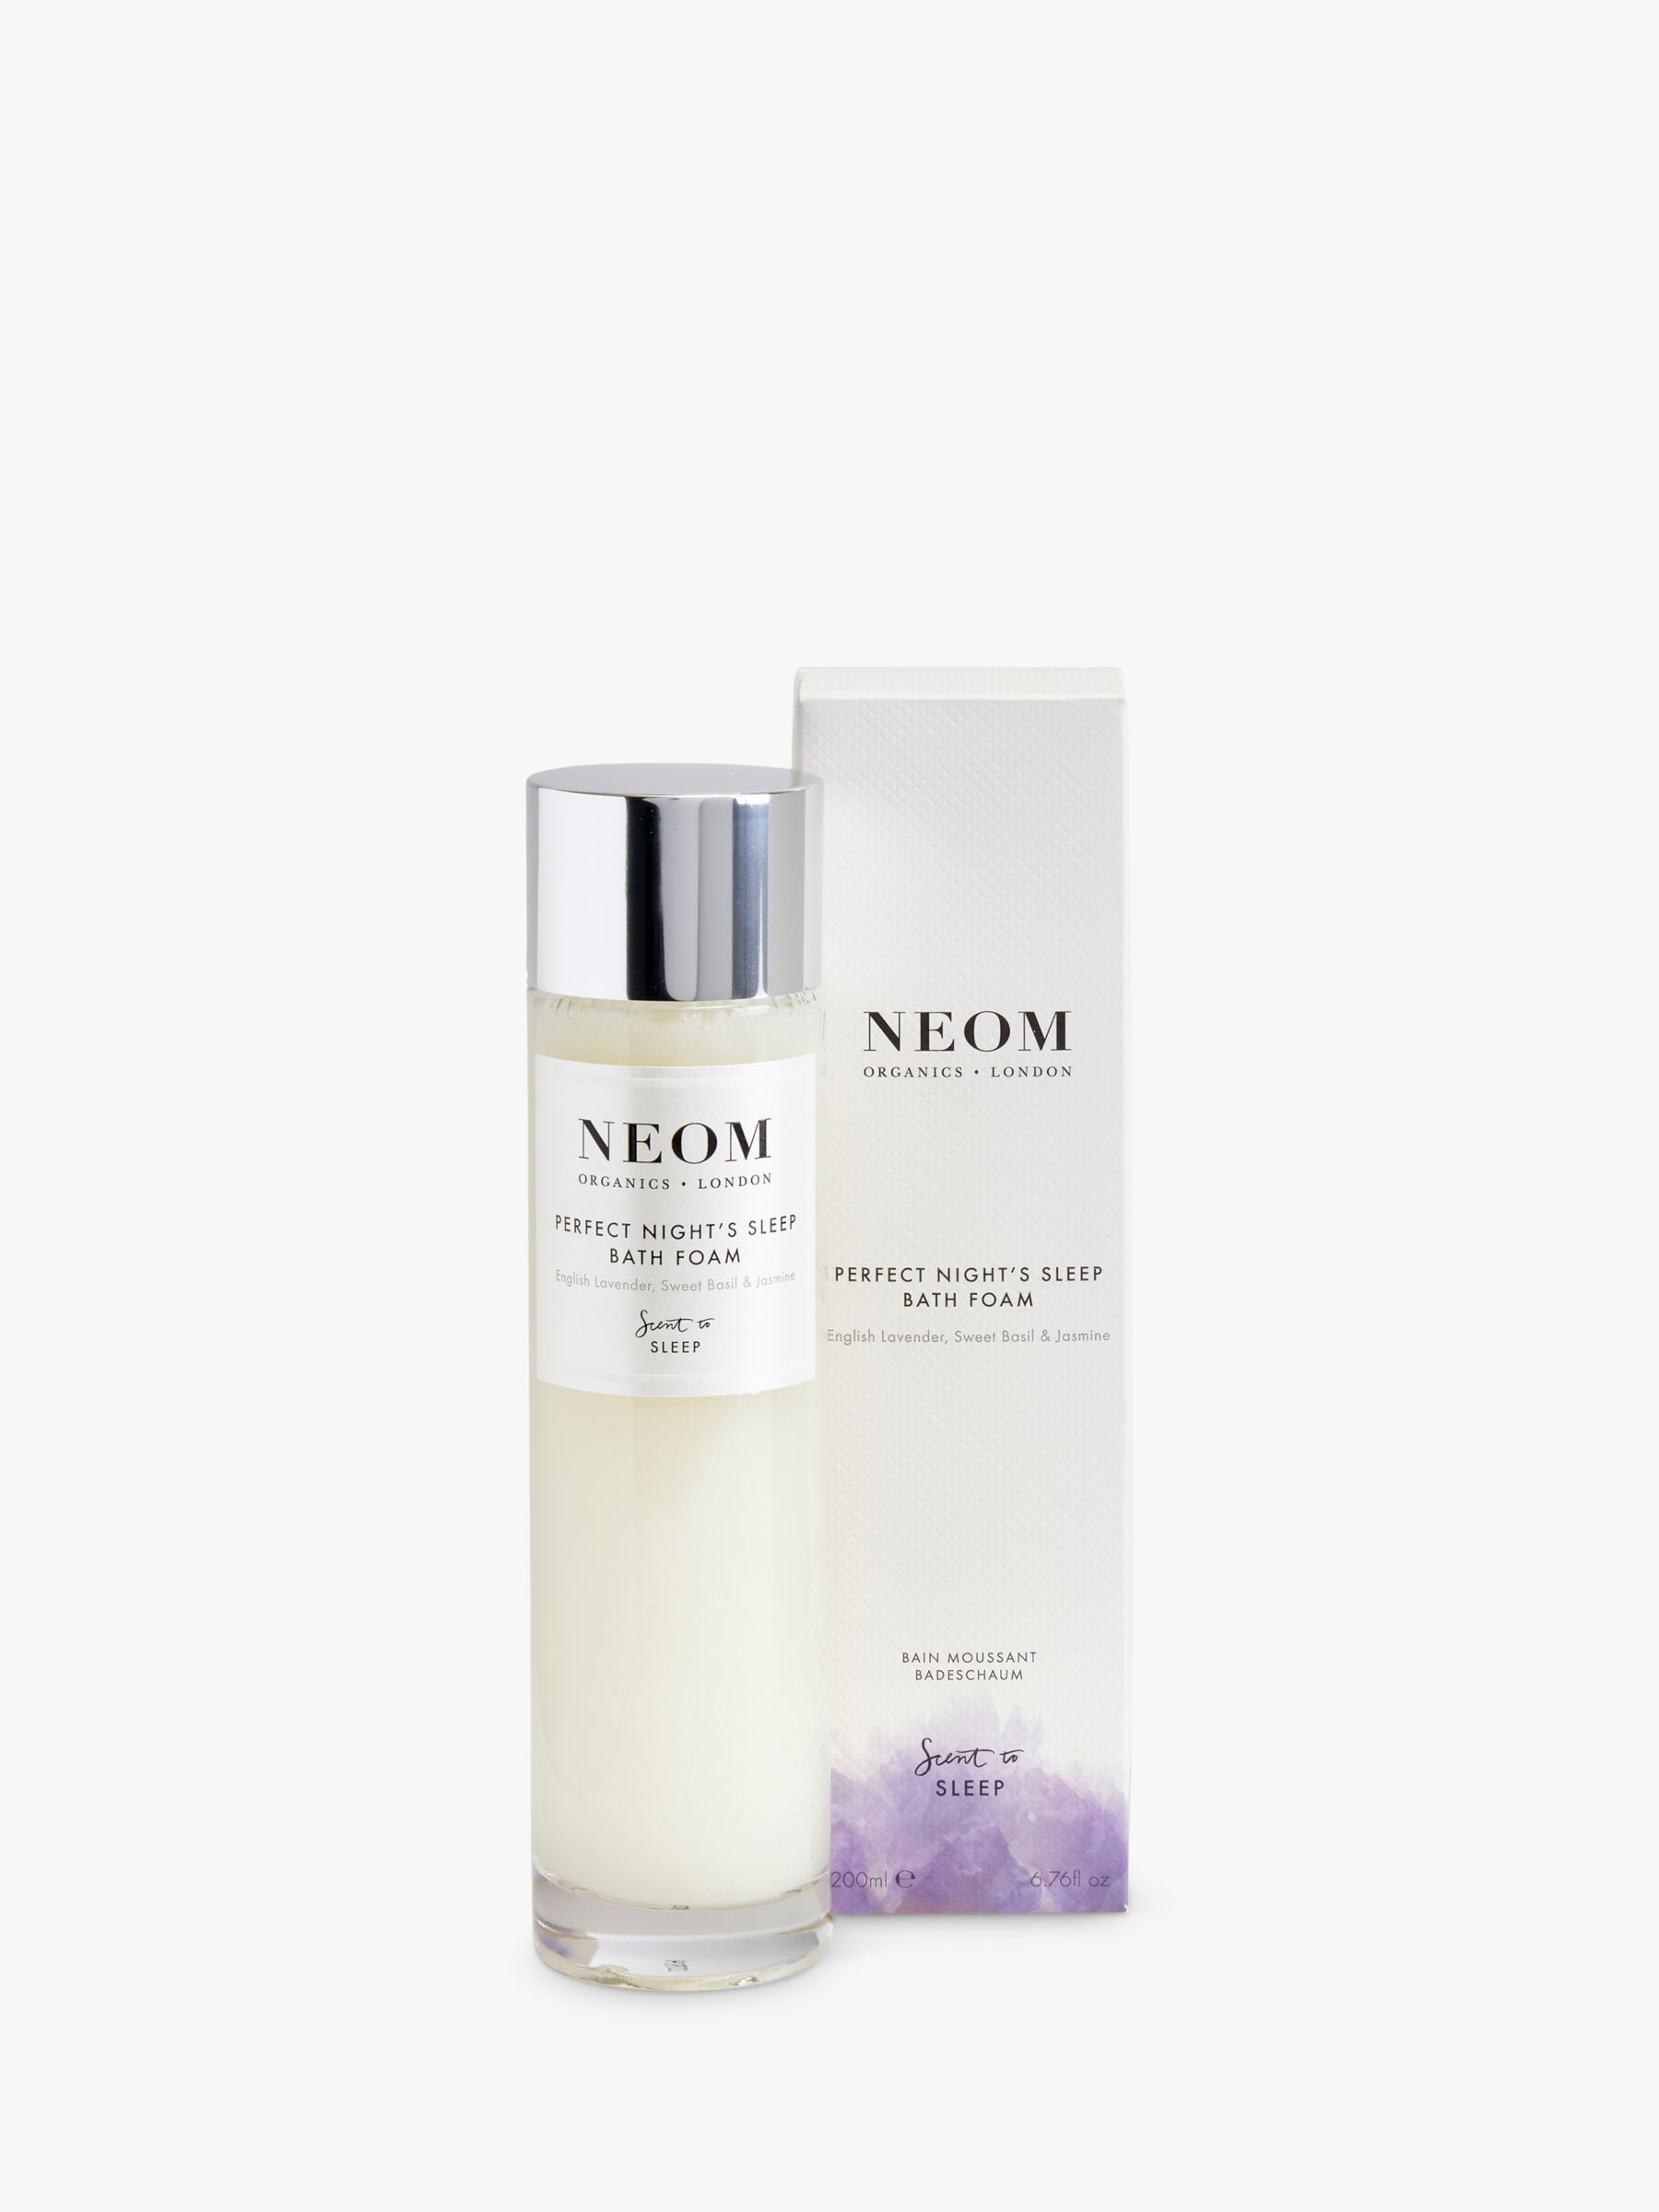 Neom Organics London Perfect Night's Sleep Bath Foam, 200ml 3